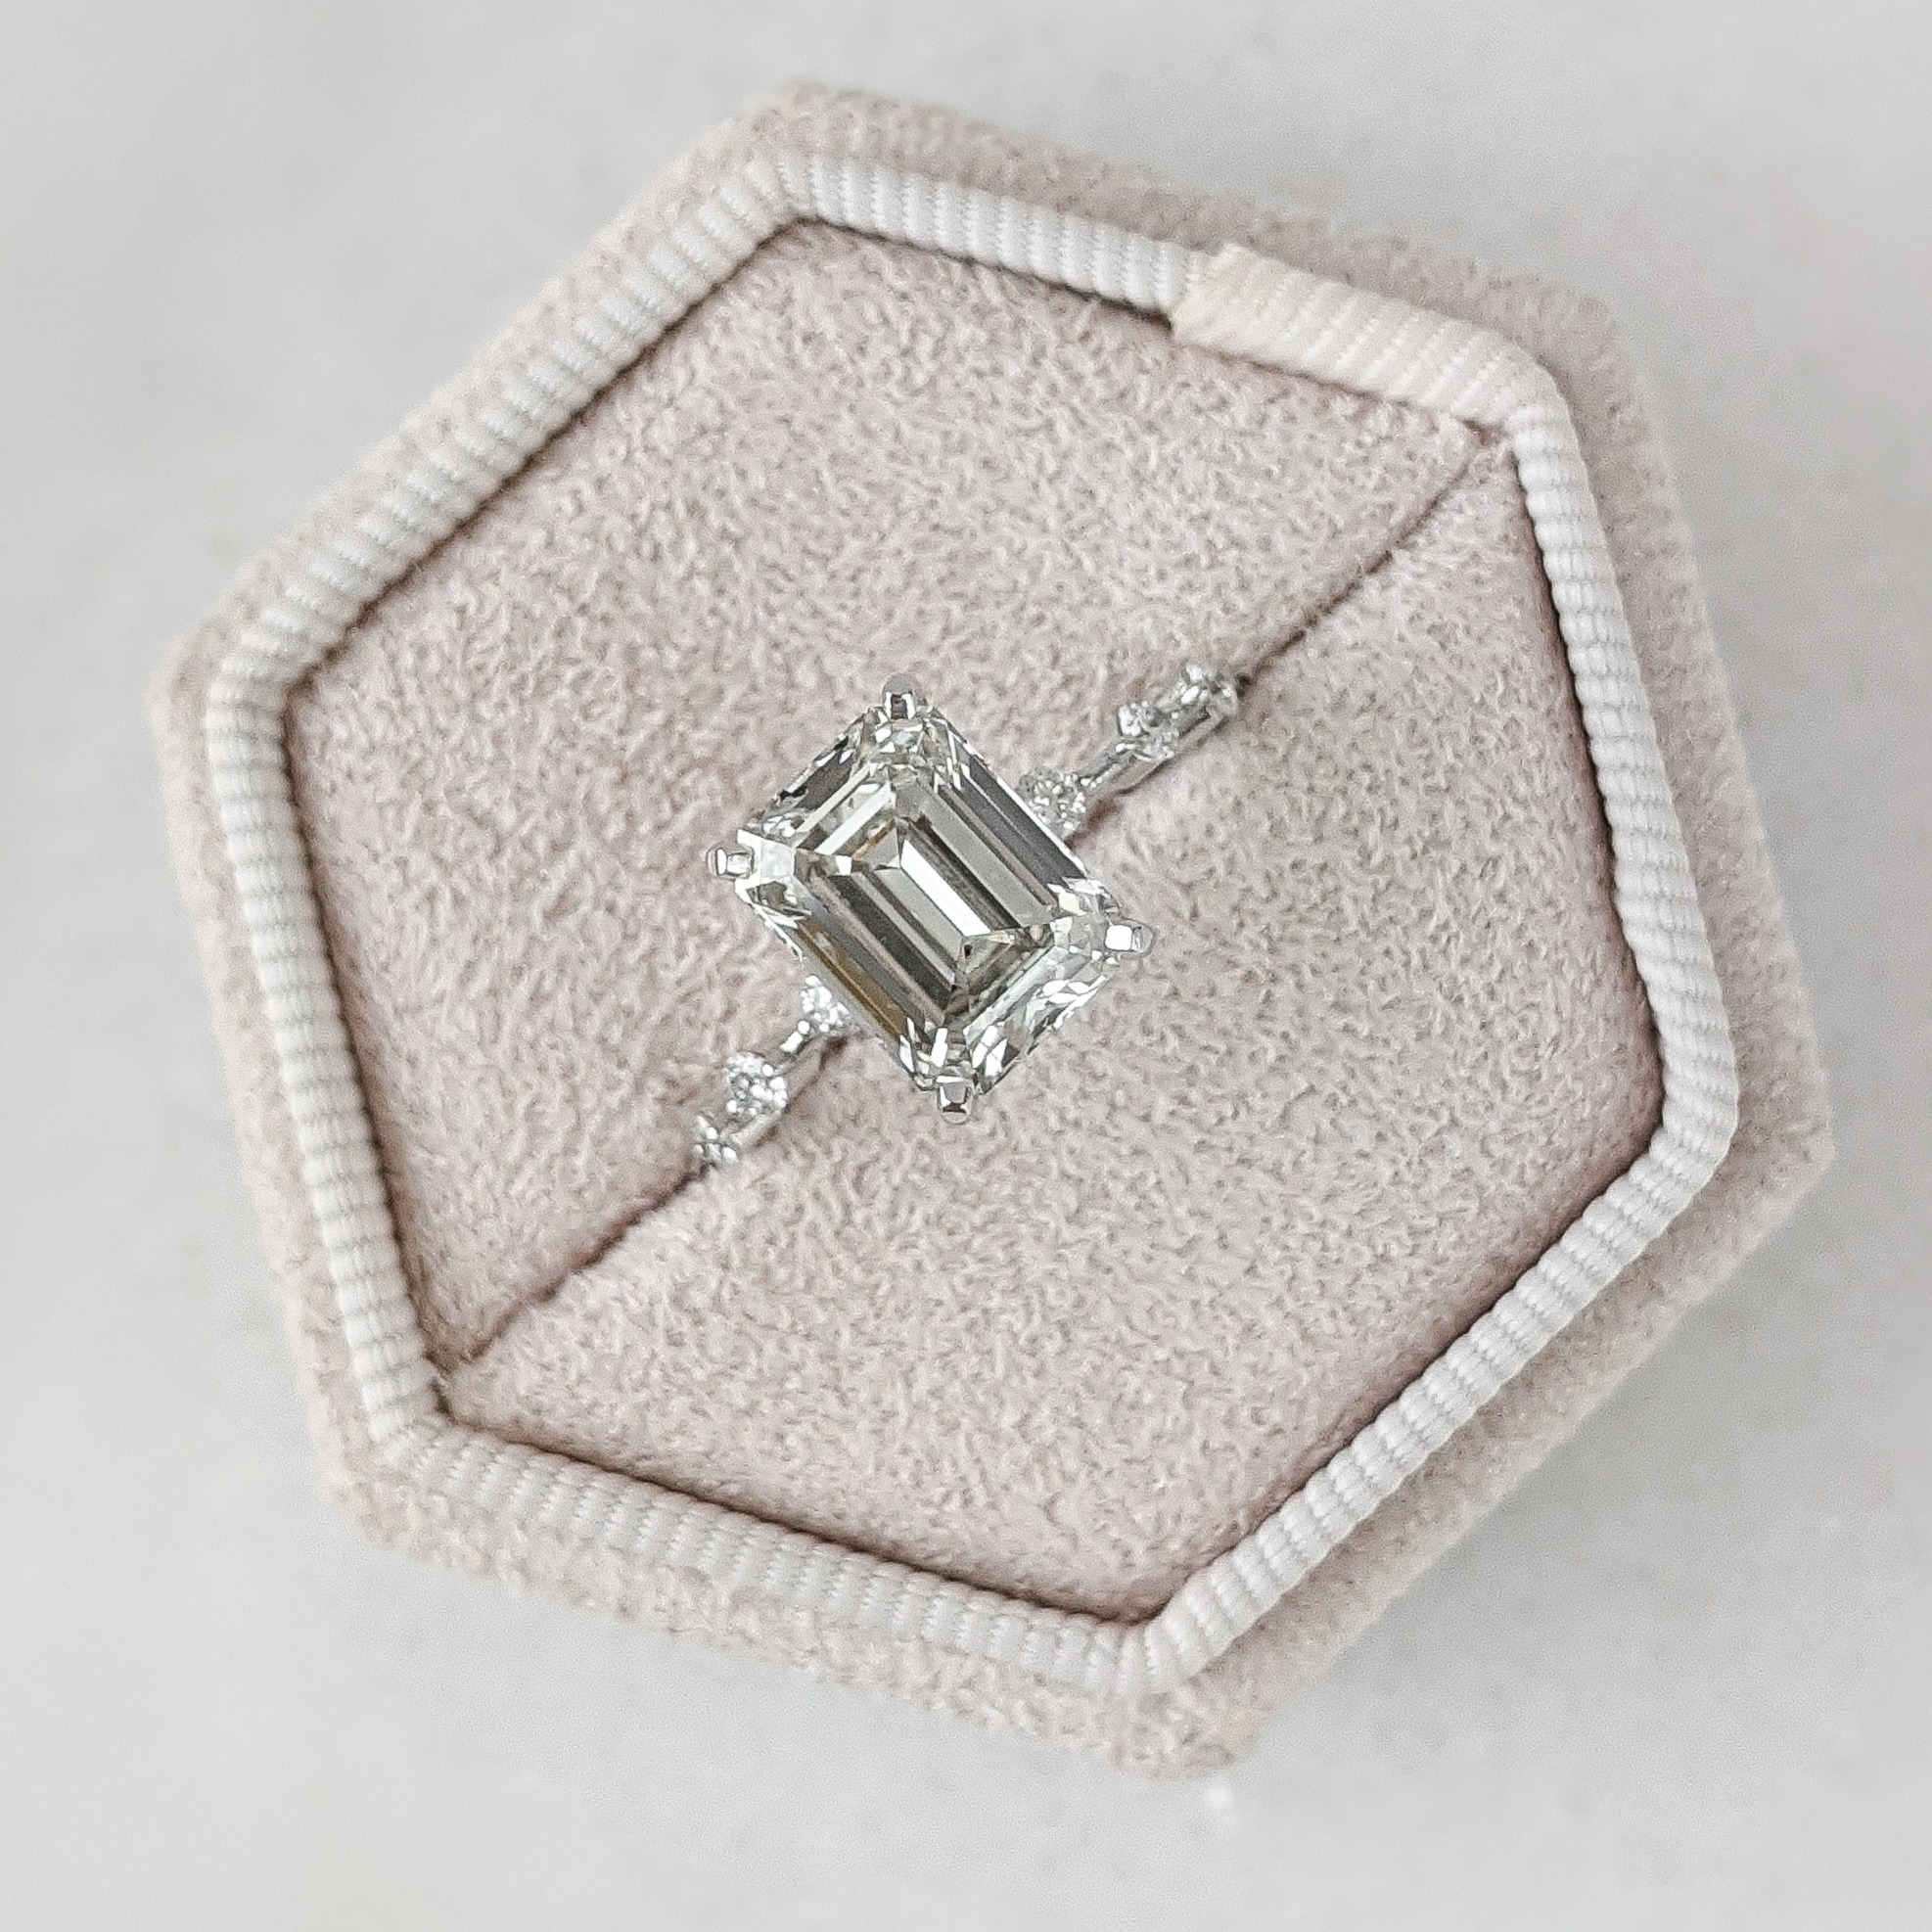 Noor 4ct Emerald Cut Diamond Engagement Ring | Nekta New York